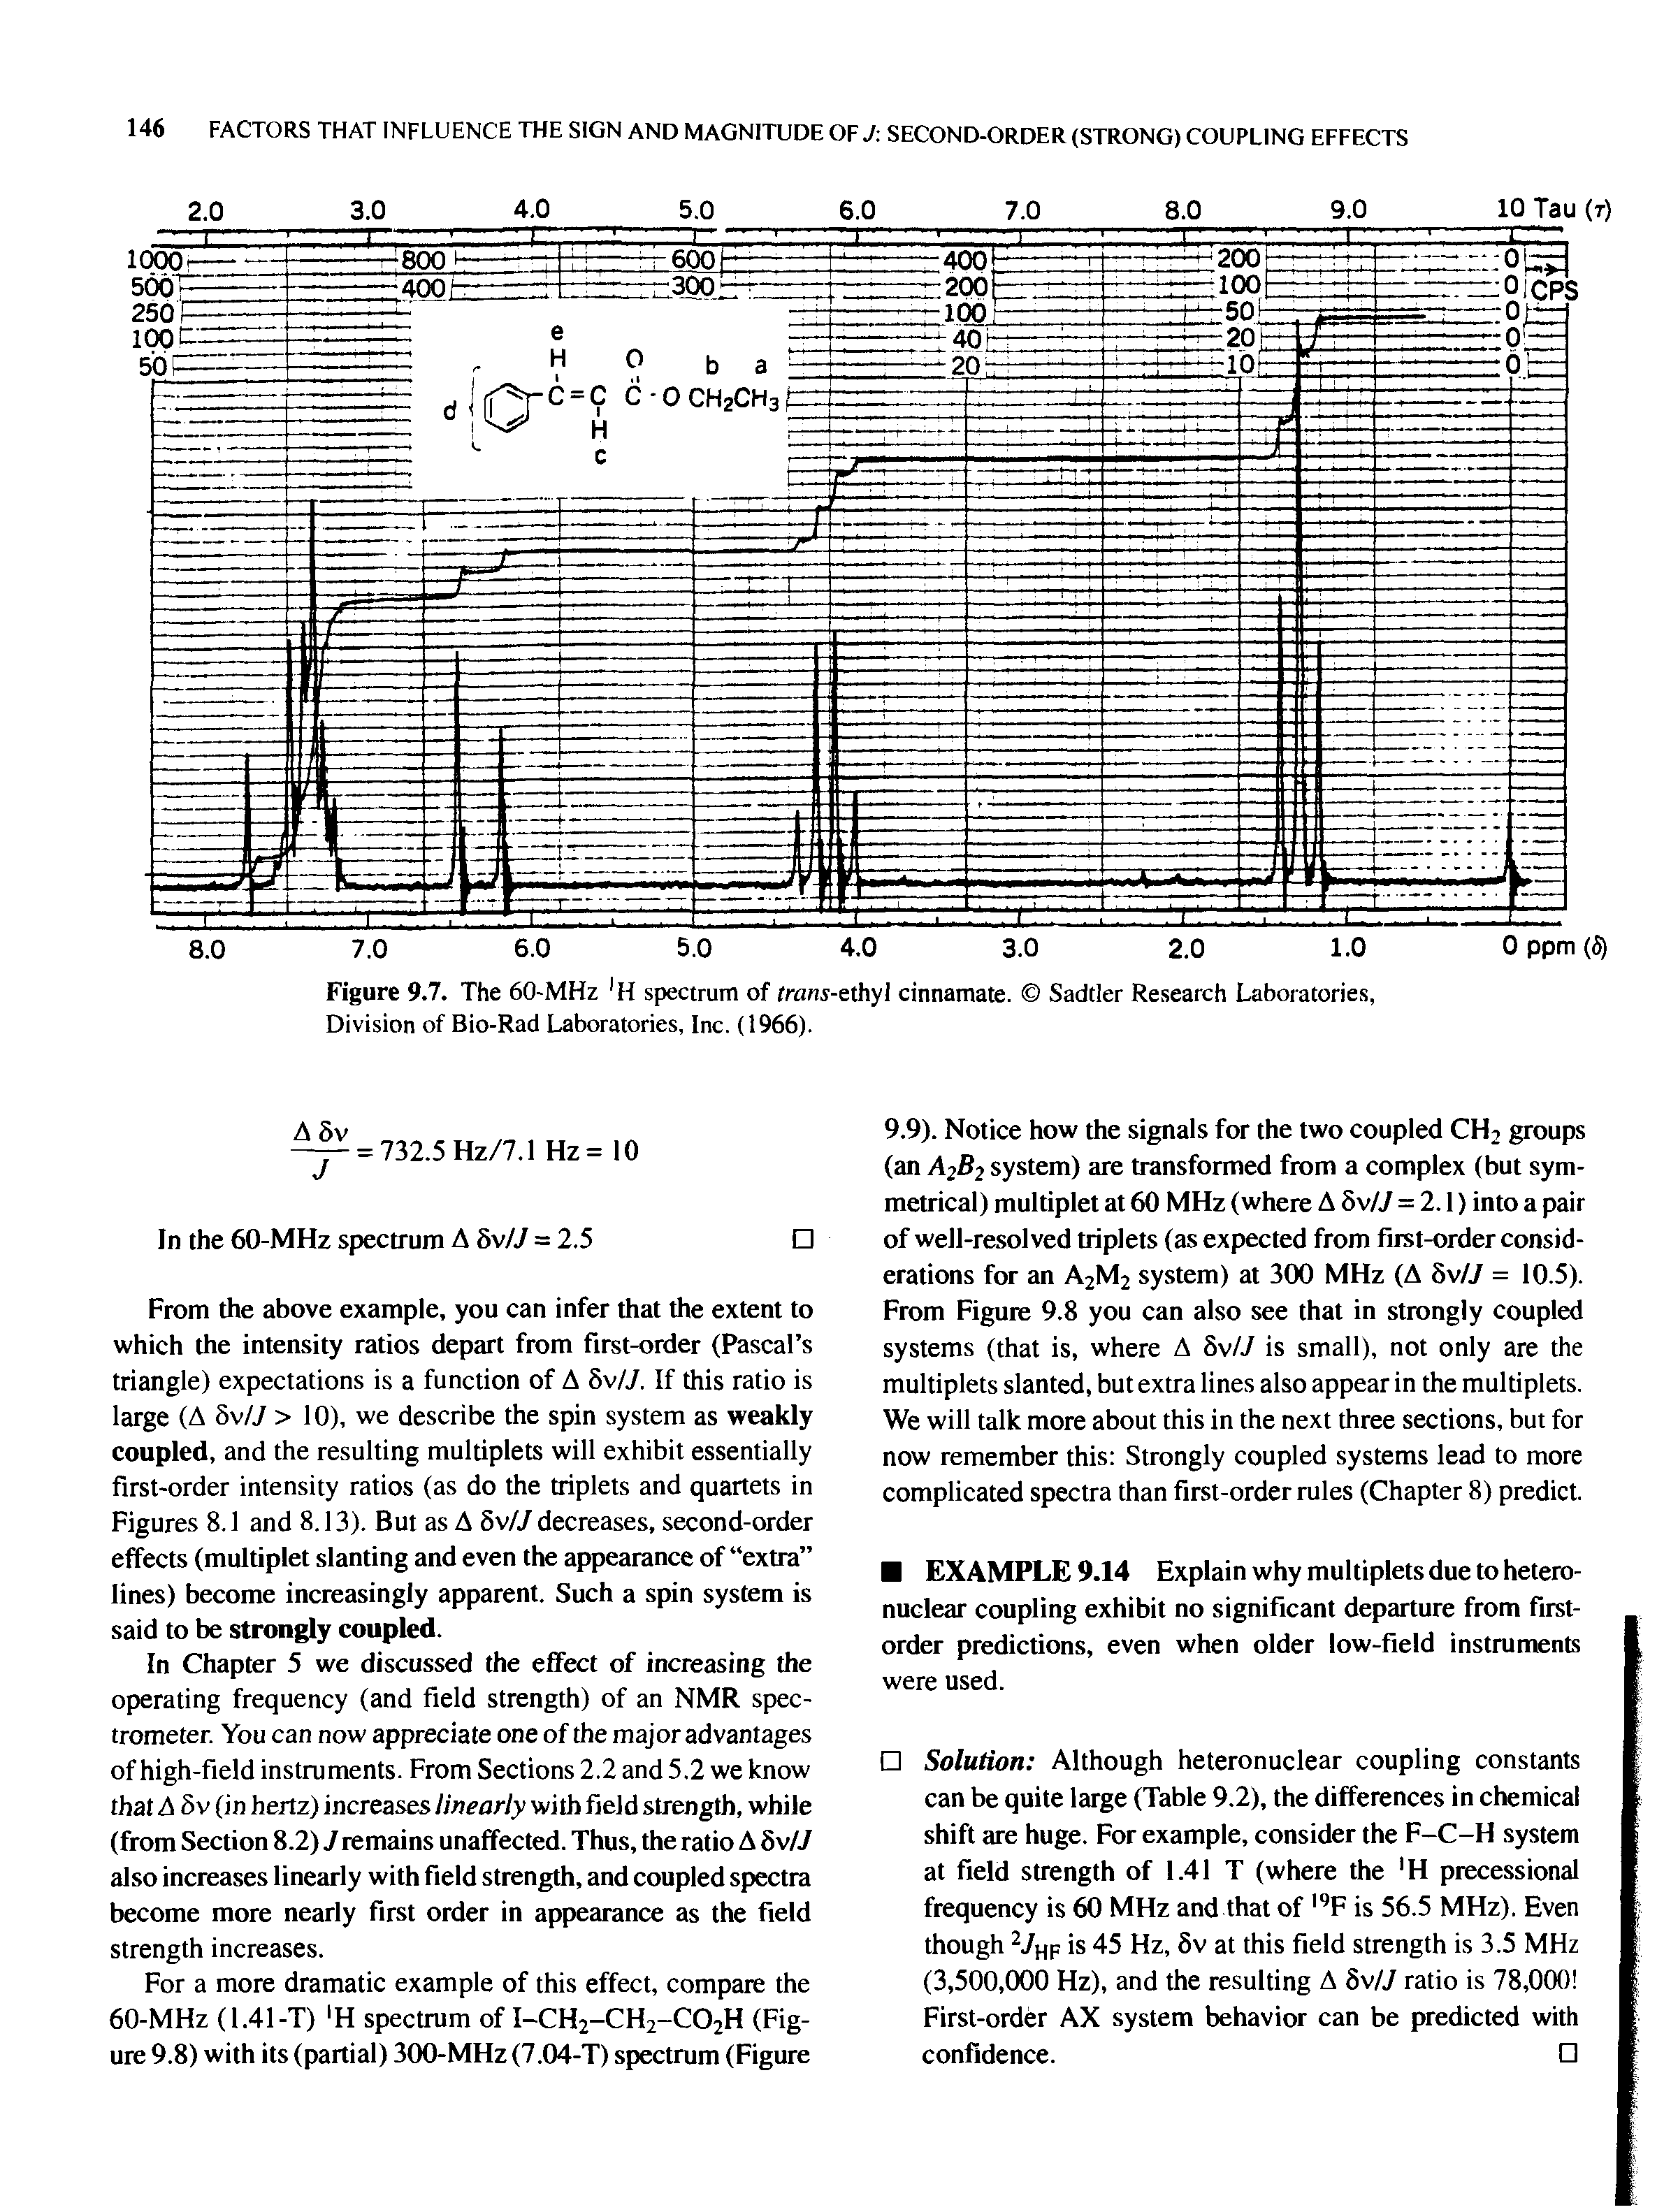 Figure 9.7. The 60-MHz H spectrum of trans-ethyl cinnamate. Sadder Research Laboratories, Division of Bio-Rad Laboratories, Inc. (1966).